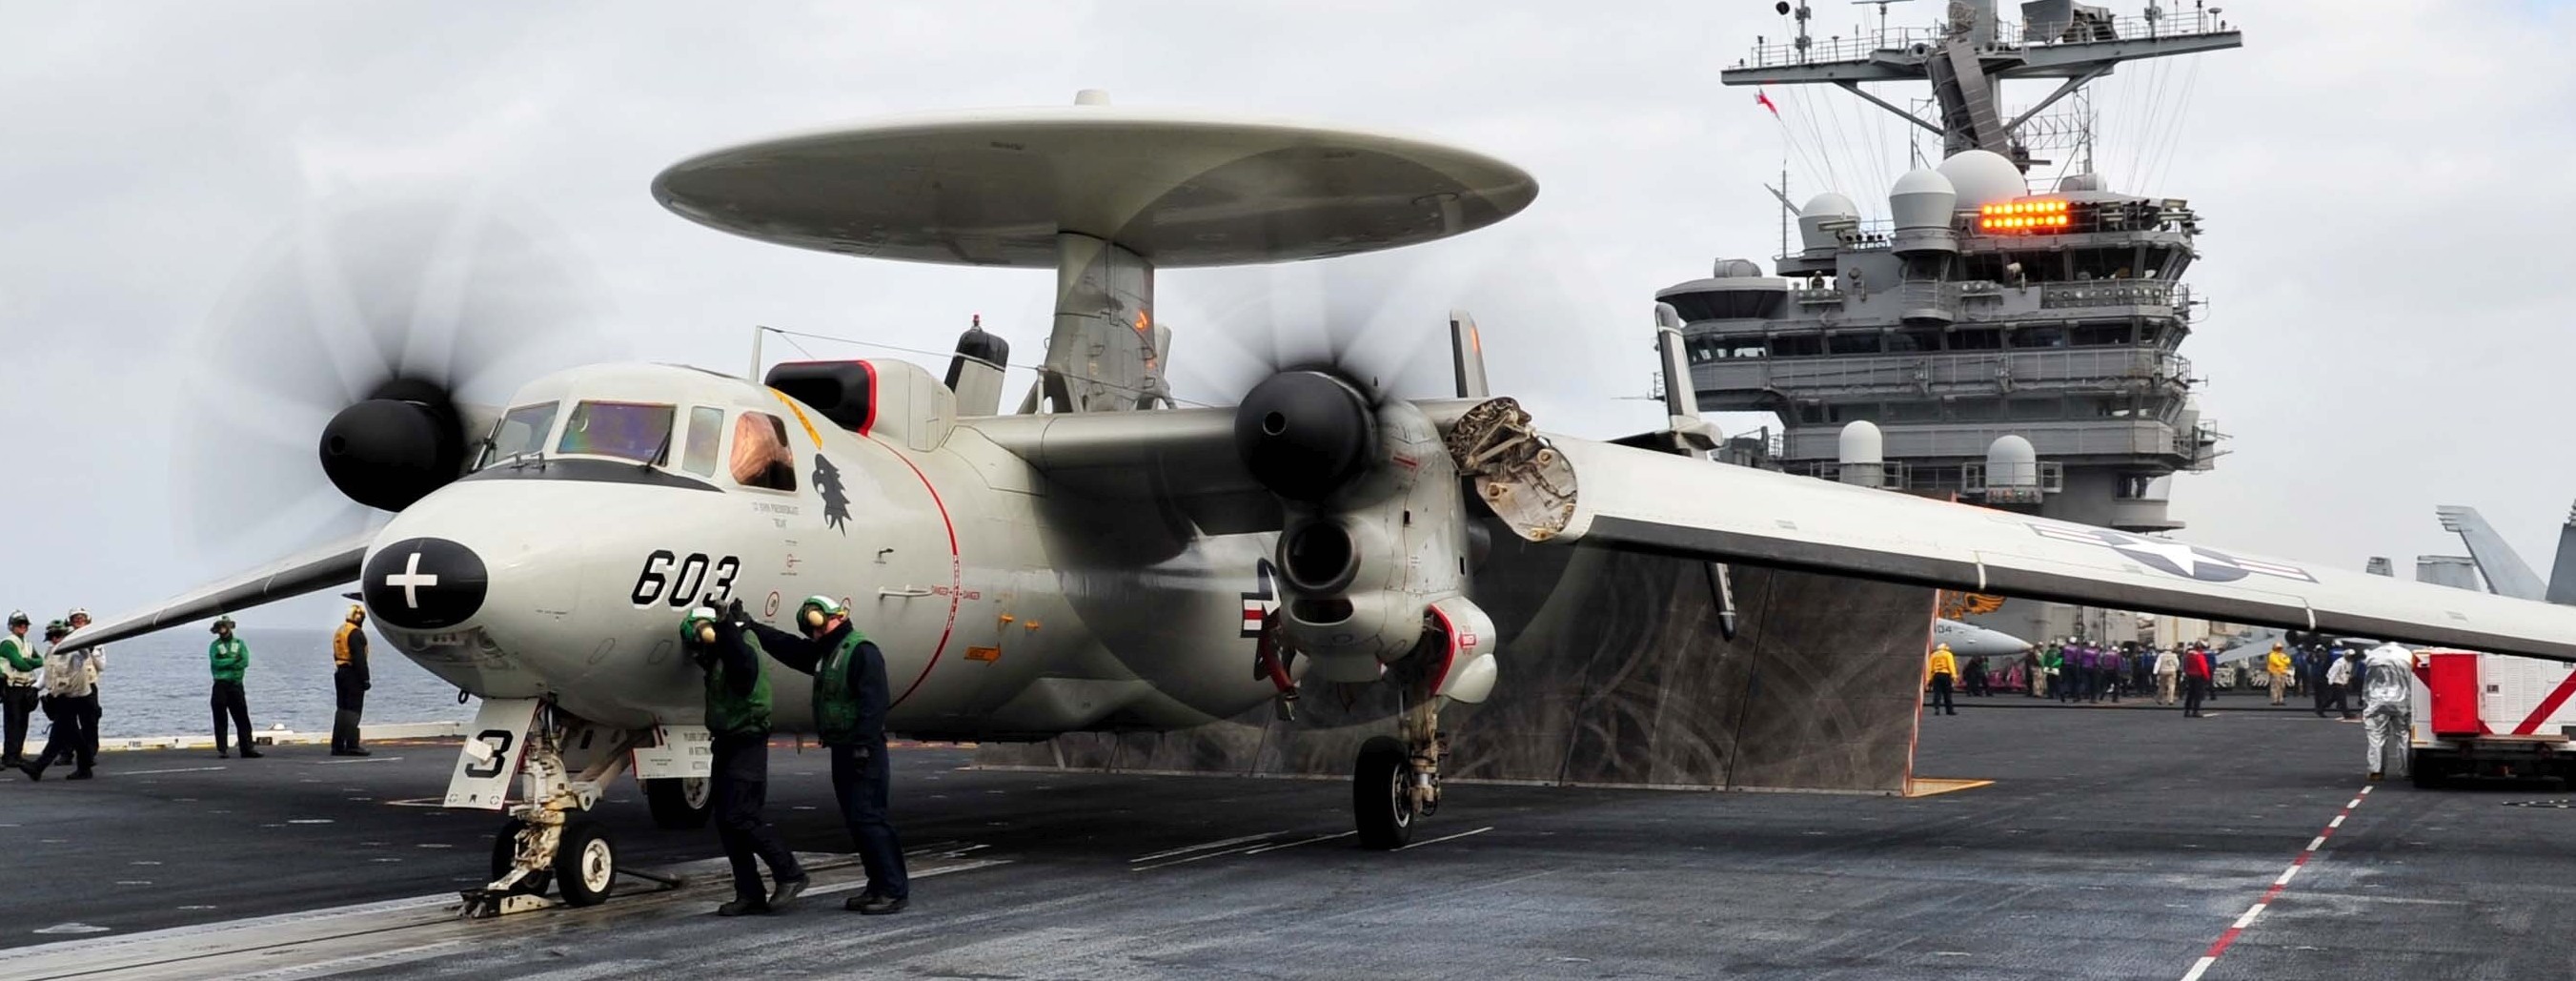 vaw-113 black eagles carrier airborne early warning squadron us navy grumman e-2c hawkeye cvw-2 uss ronald reagan cvn-76 19